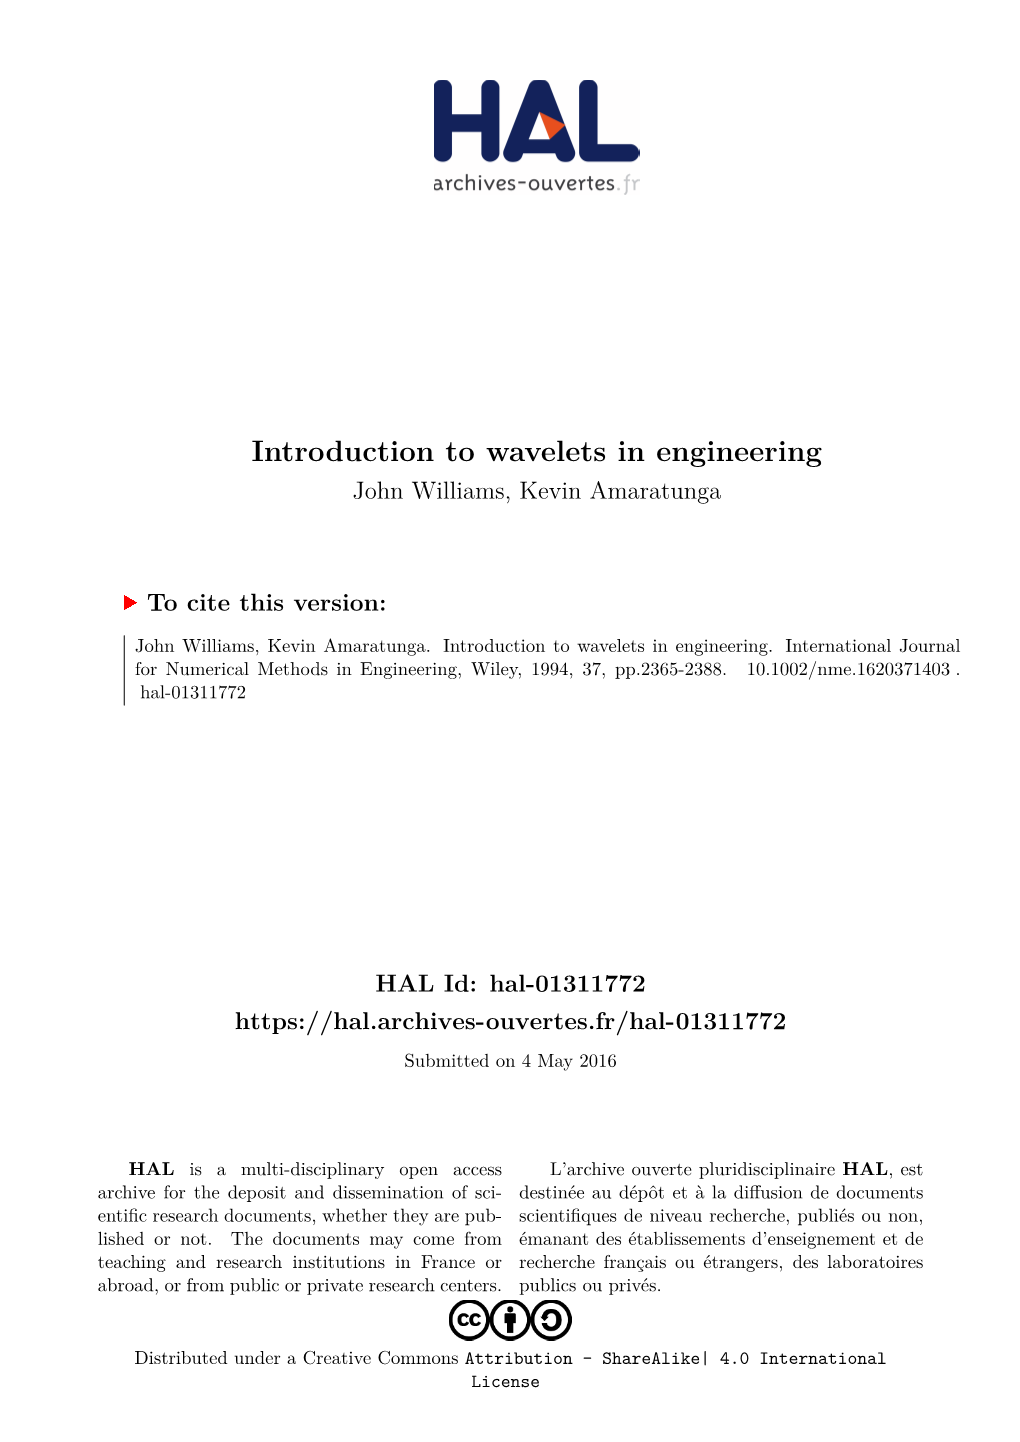 Introduction to Wavelets in Engineering John Williams, Kevin Amaratunga